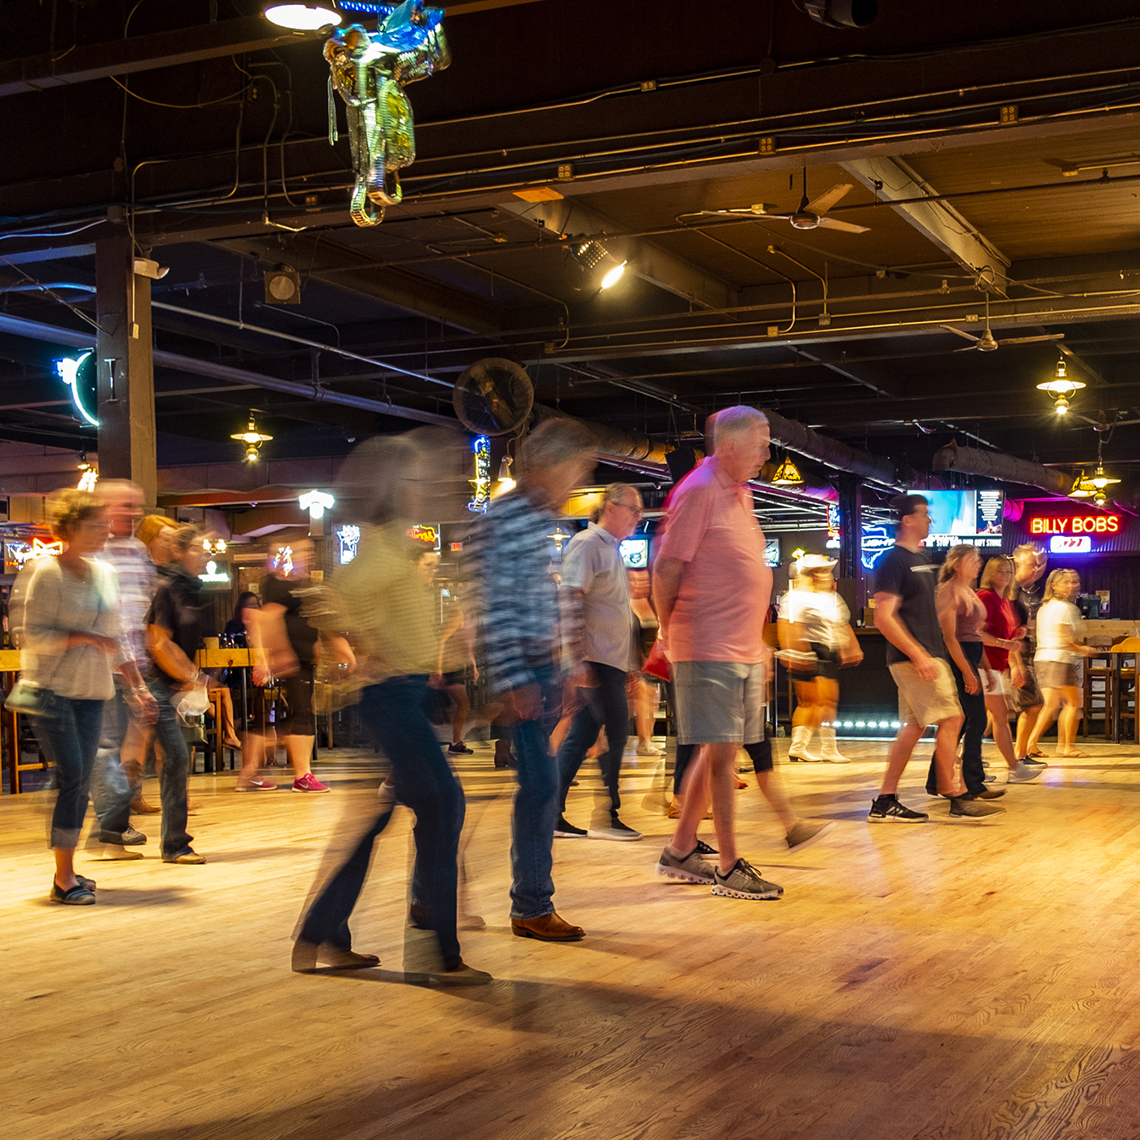 Personas bailando en un salón de baile en Texas